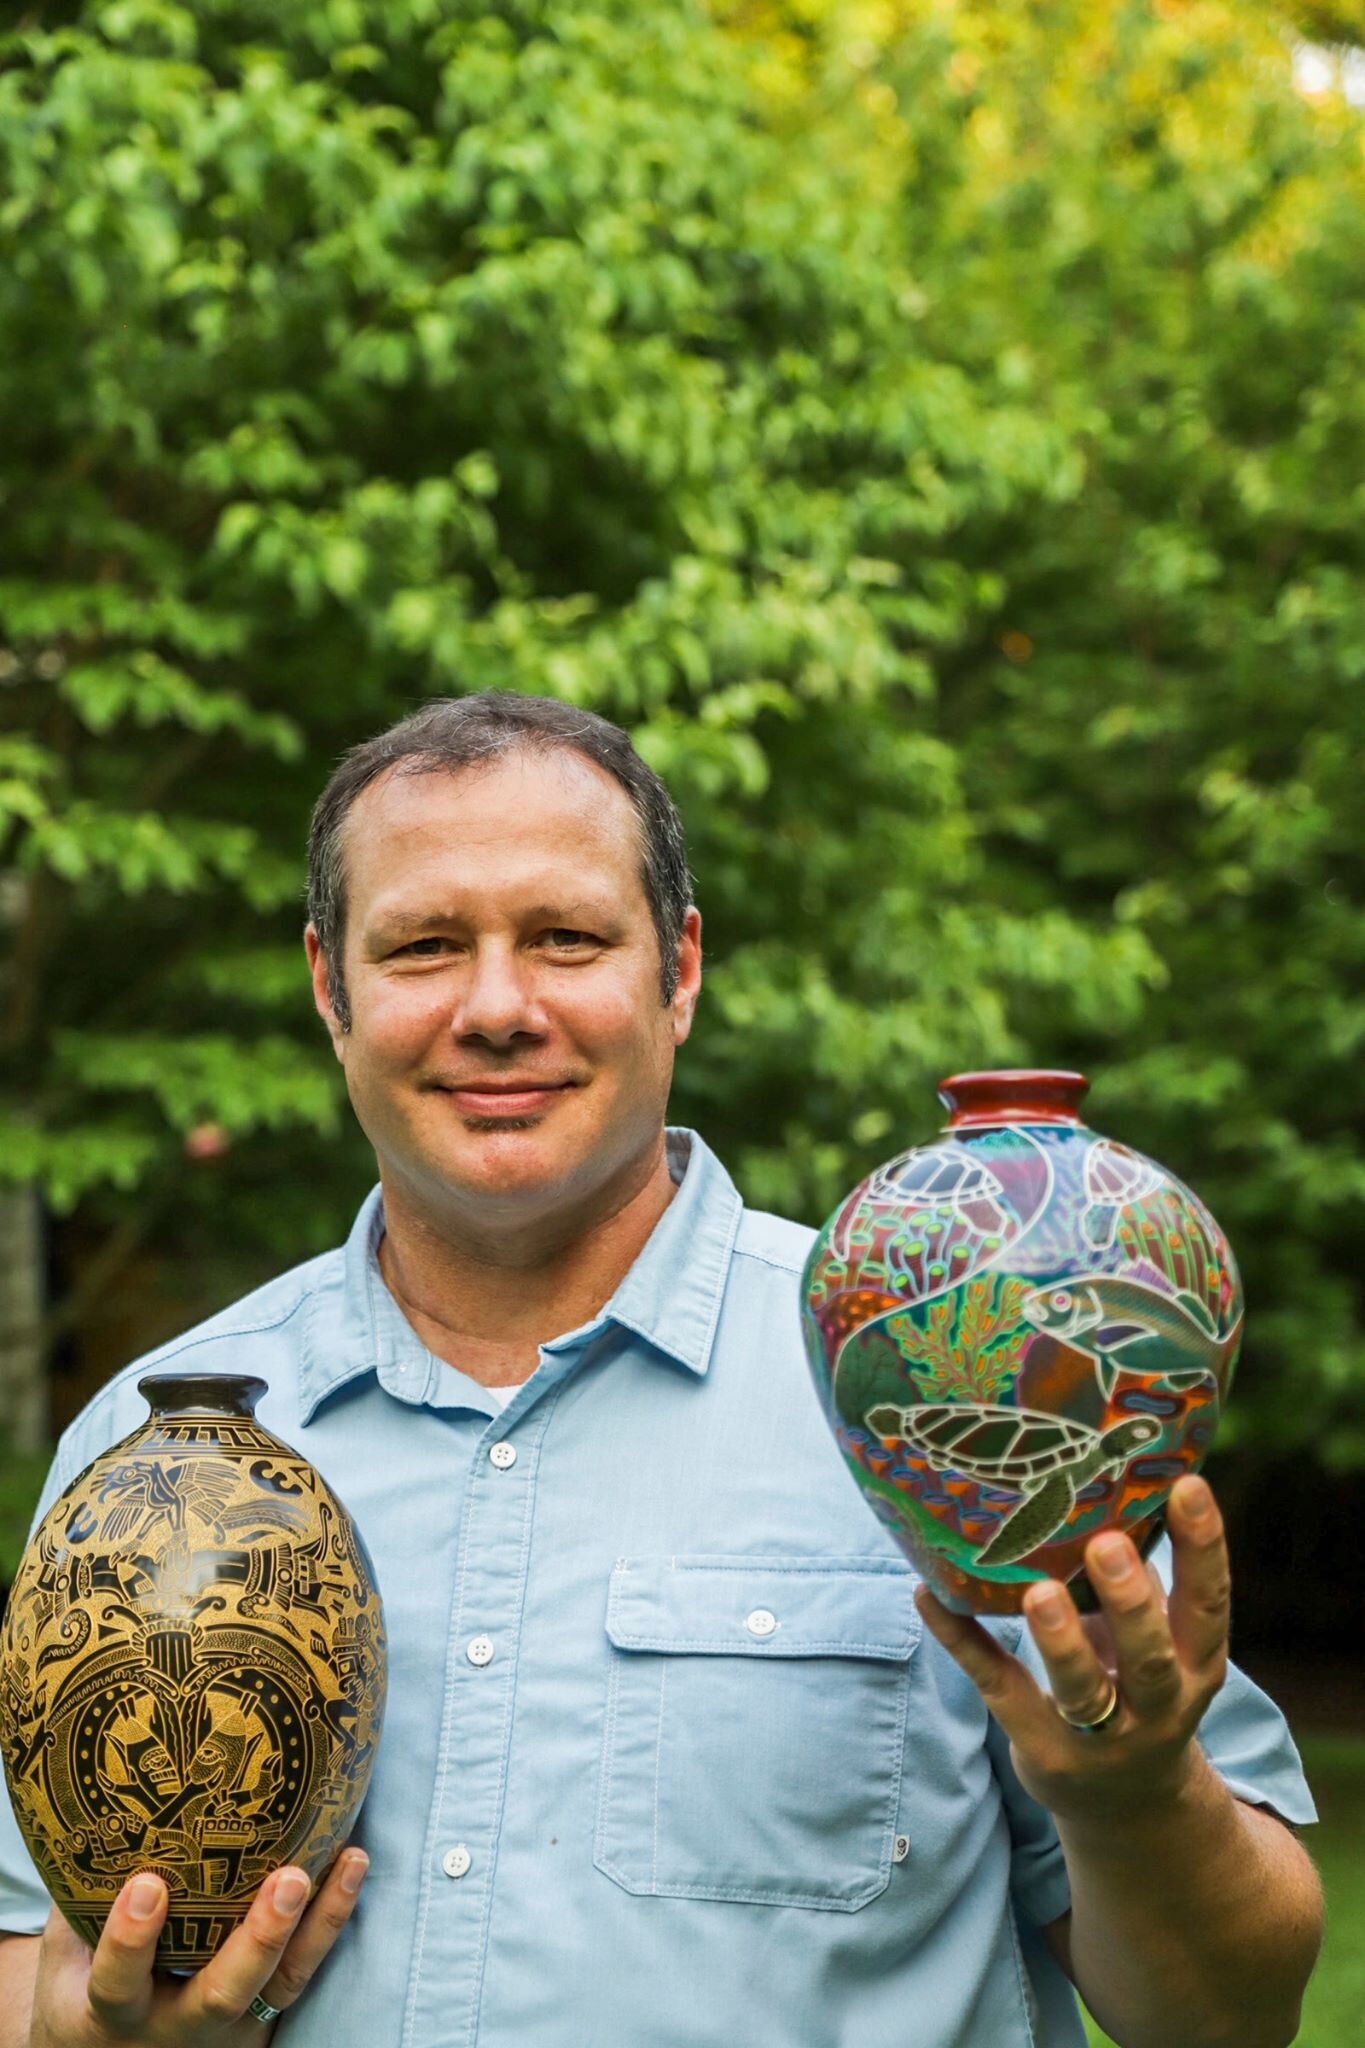 Paul Devoti, Founder of Nica Ceramic Art and AtlantiStudio